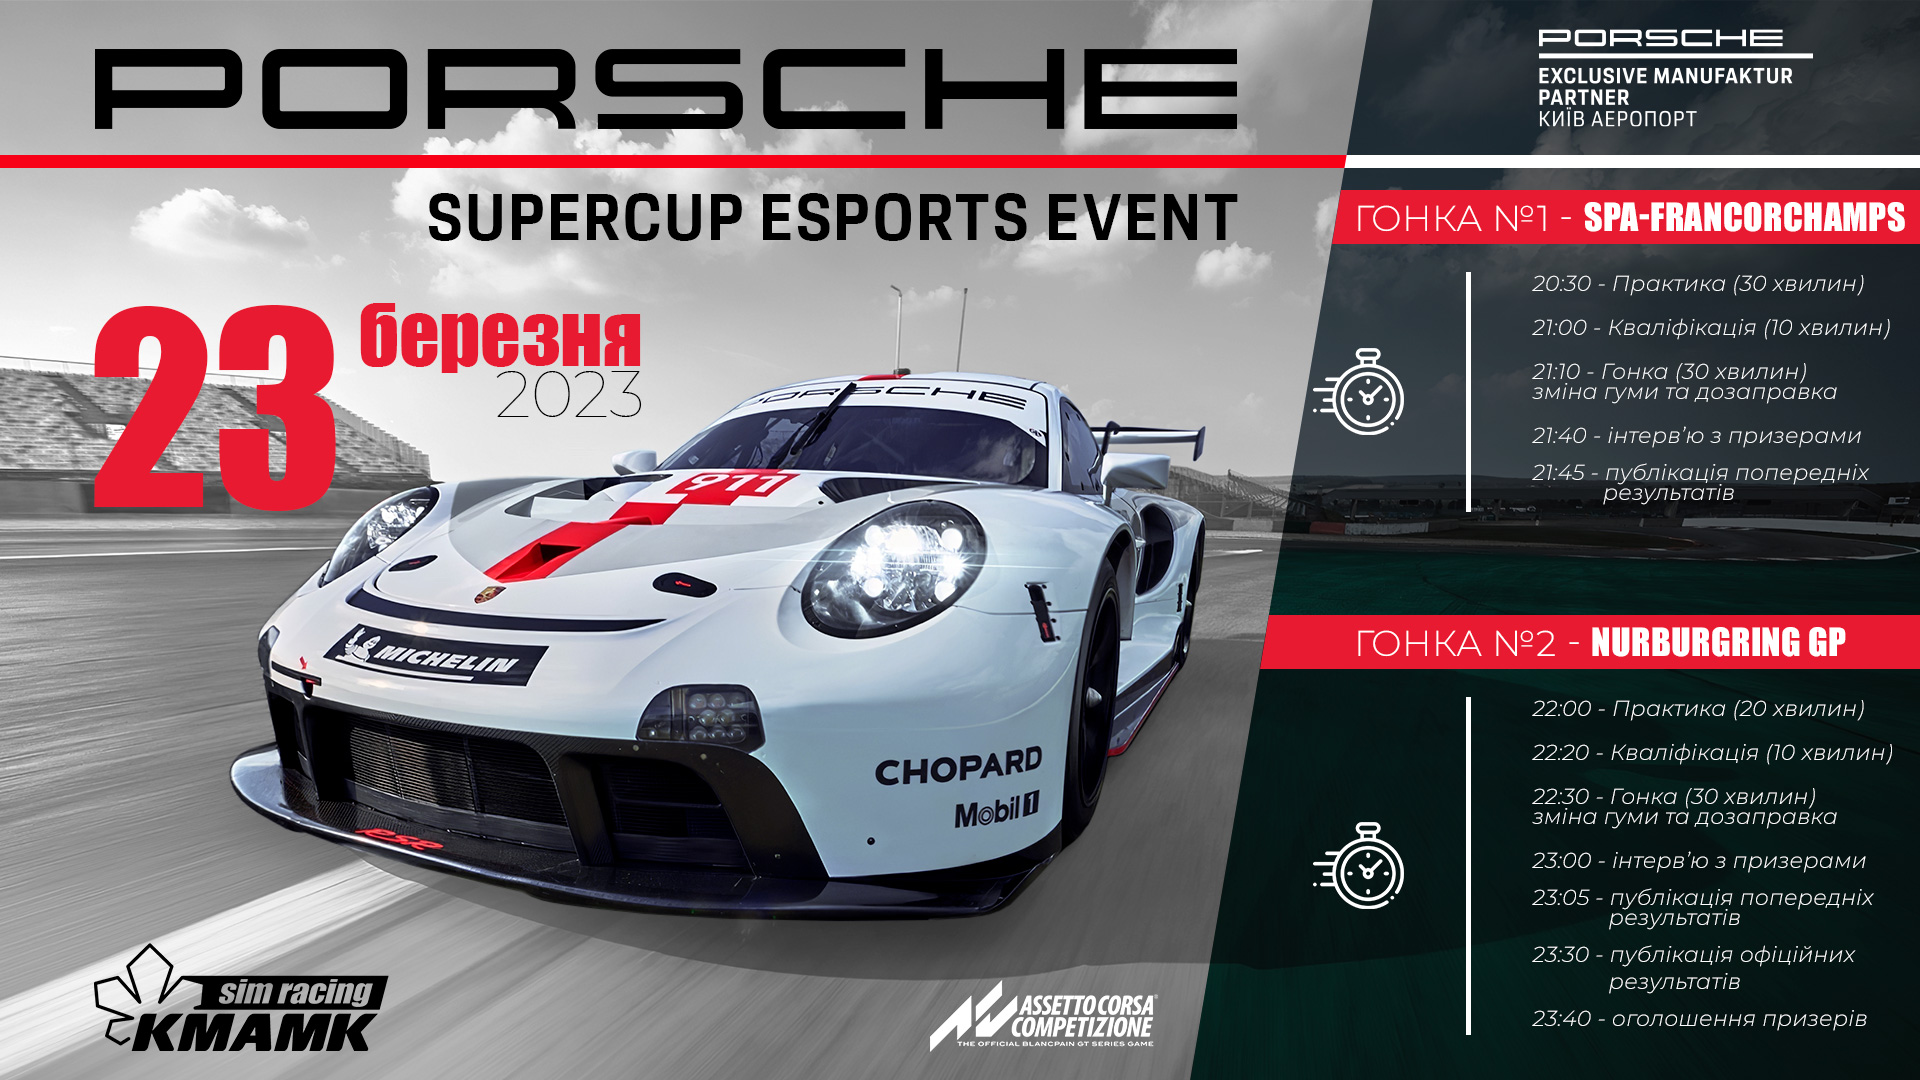 Porsche Supercup Event